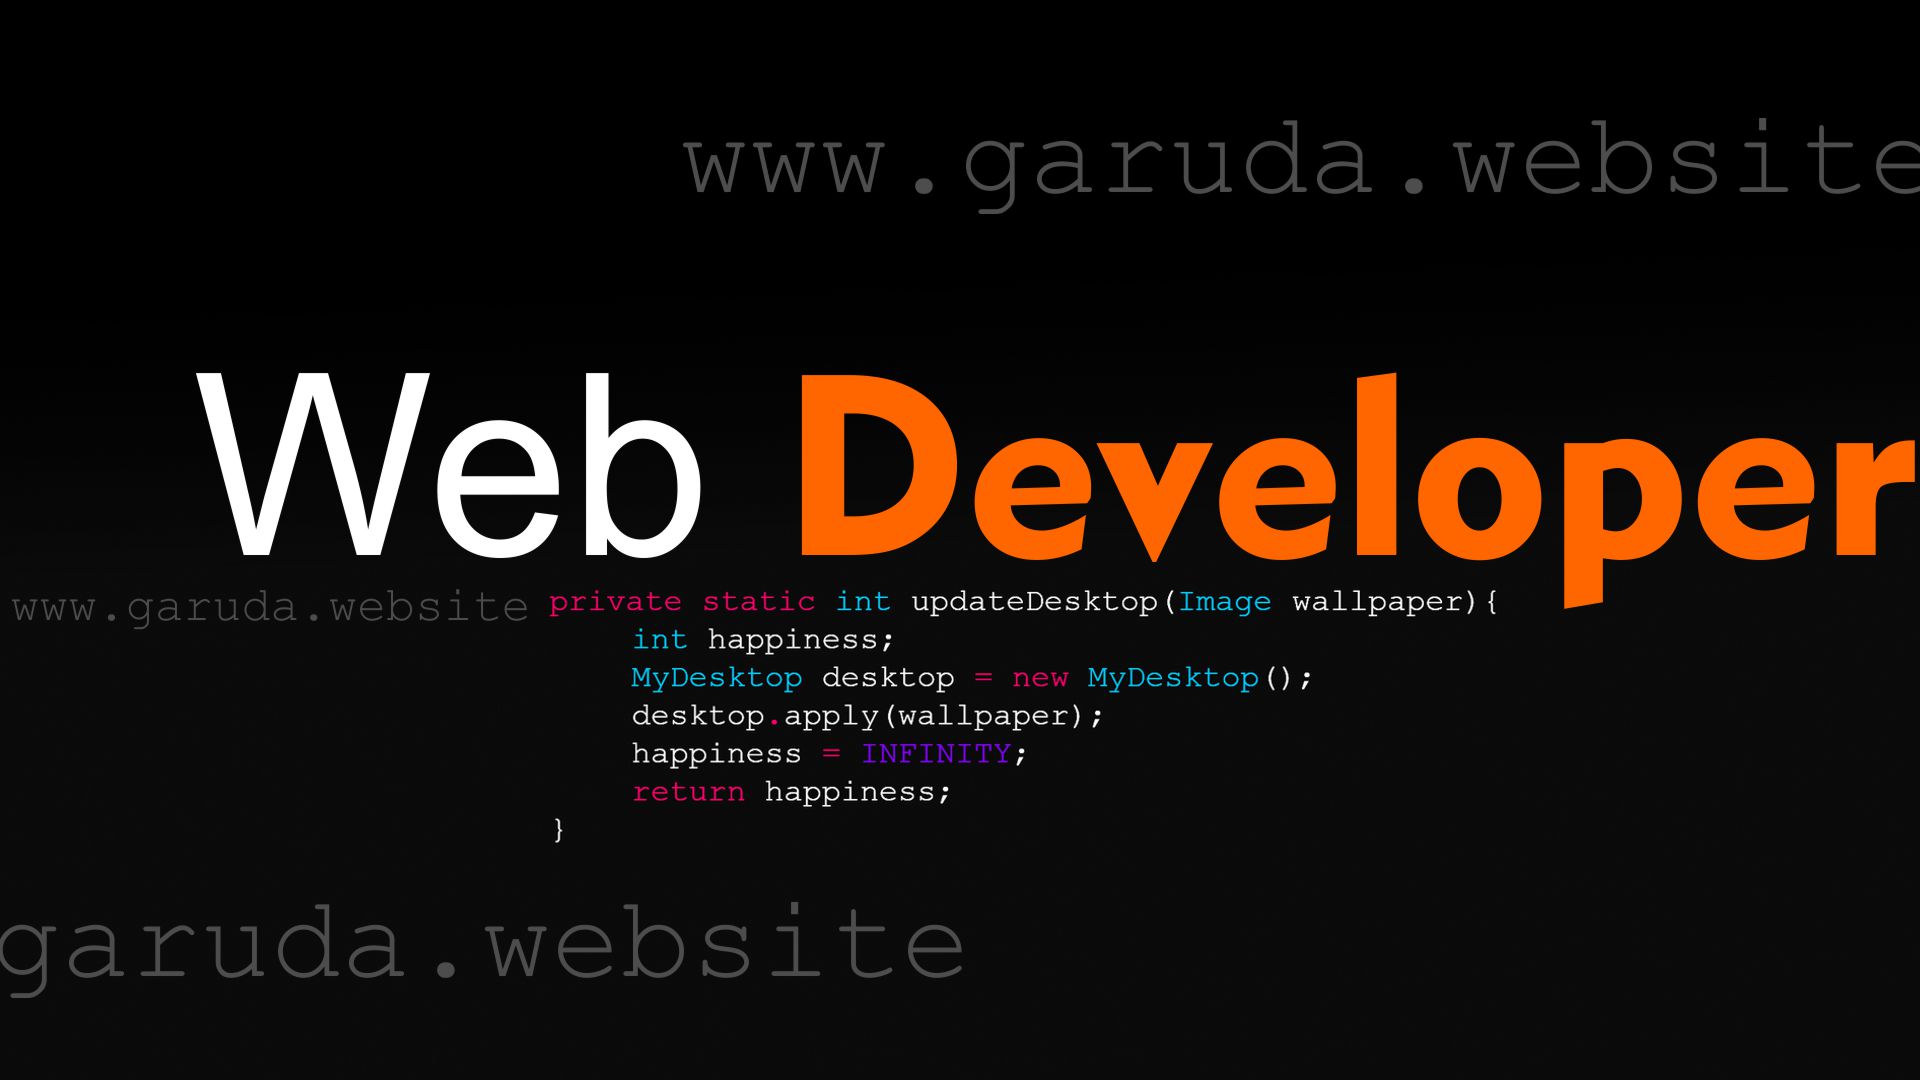 web developer - apa itu dan bagaimana cara kerjanya